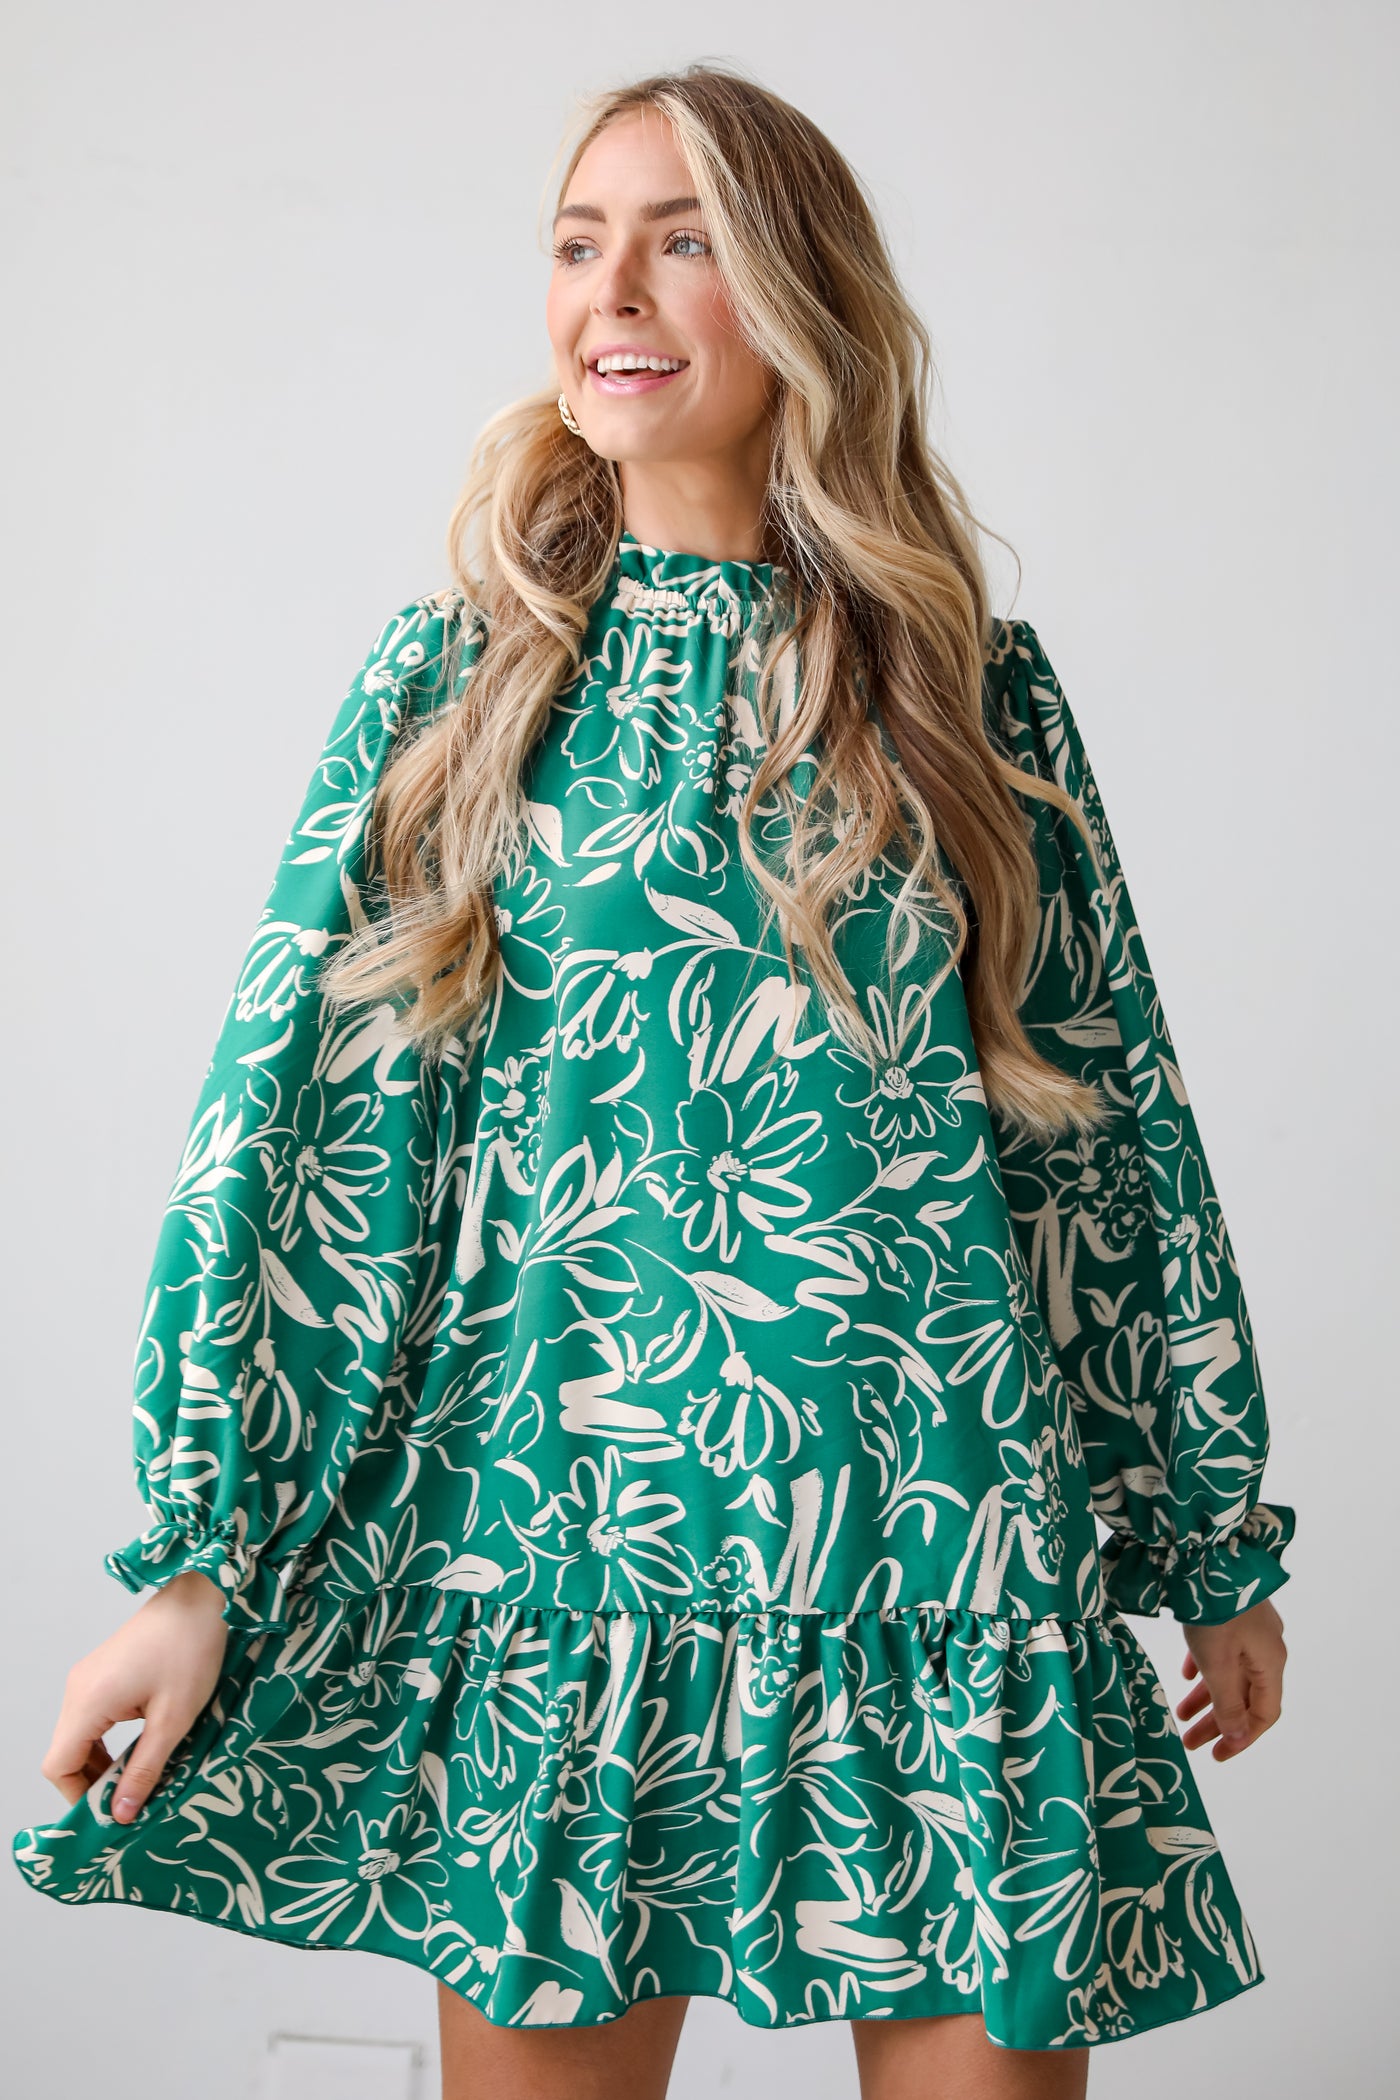 Darling Quality Green Floral Mini Dress. floral dresses